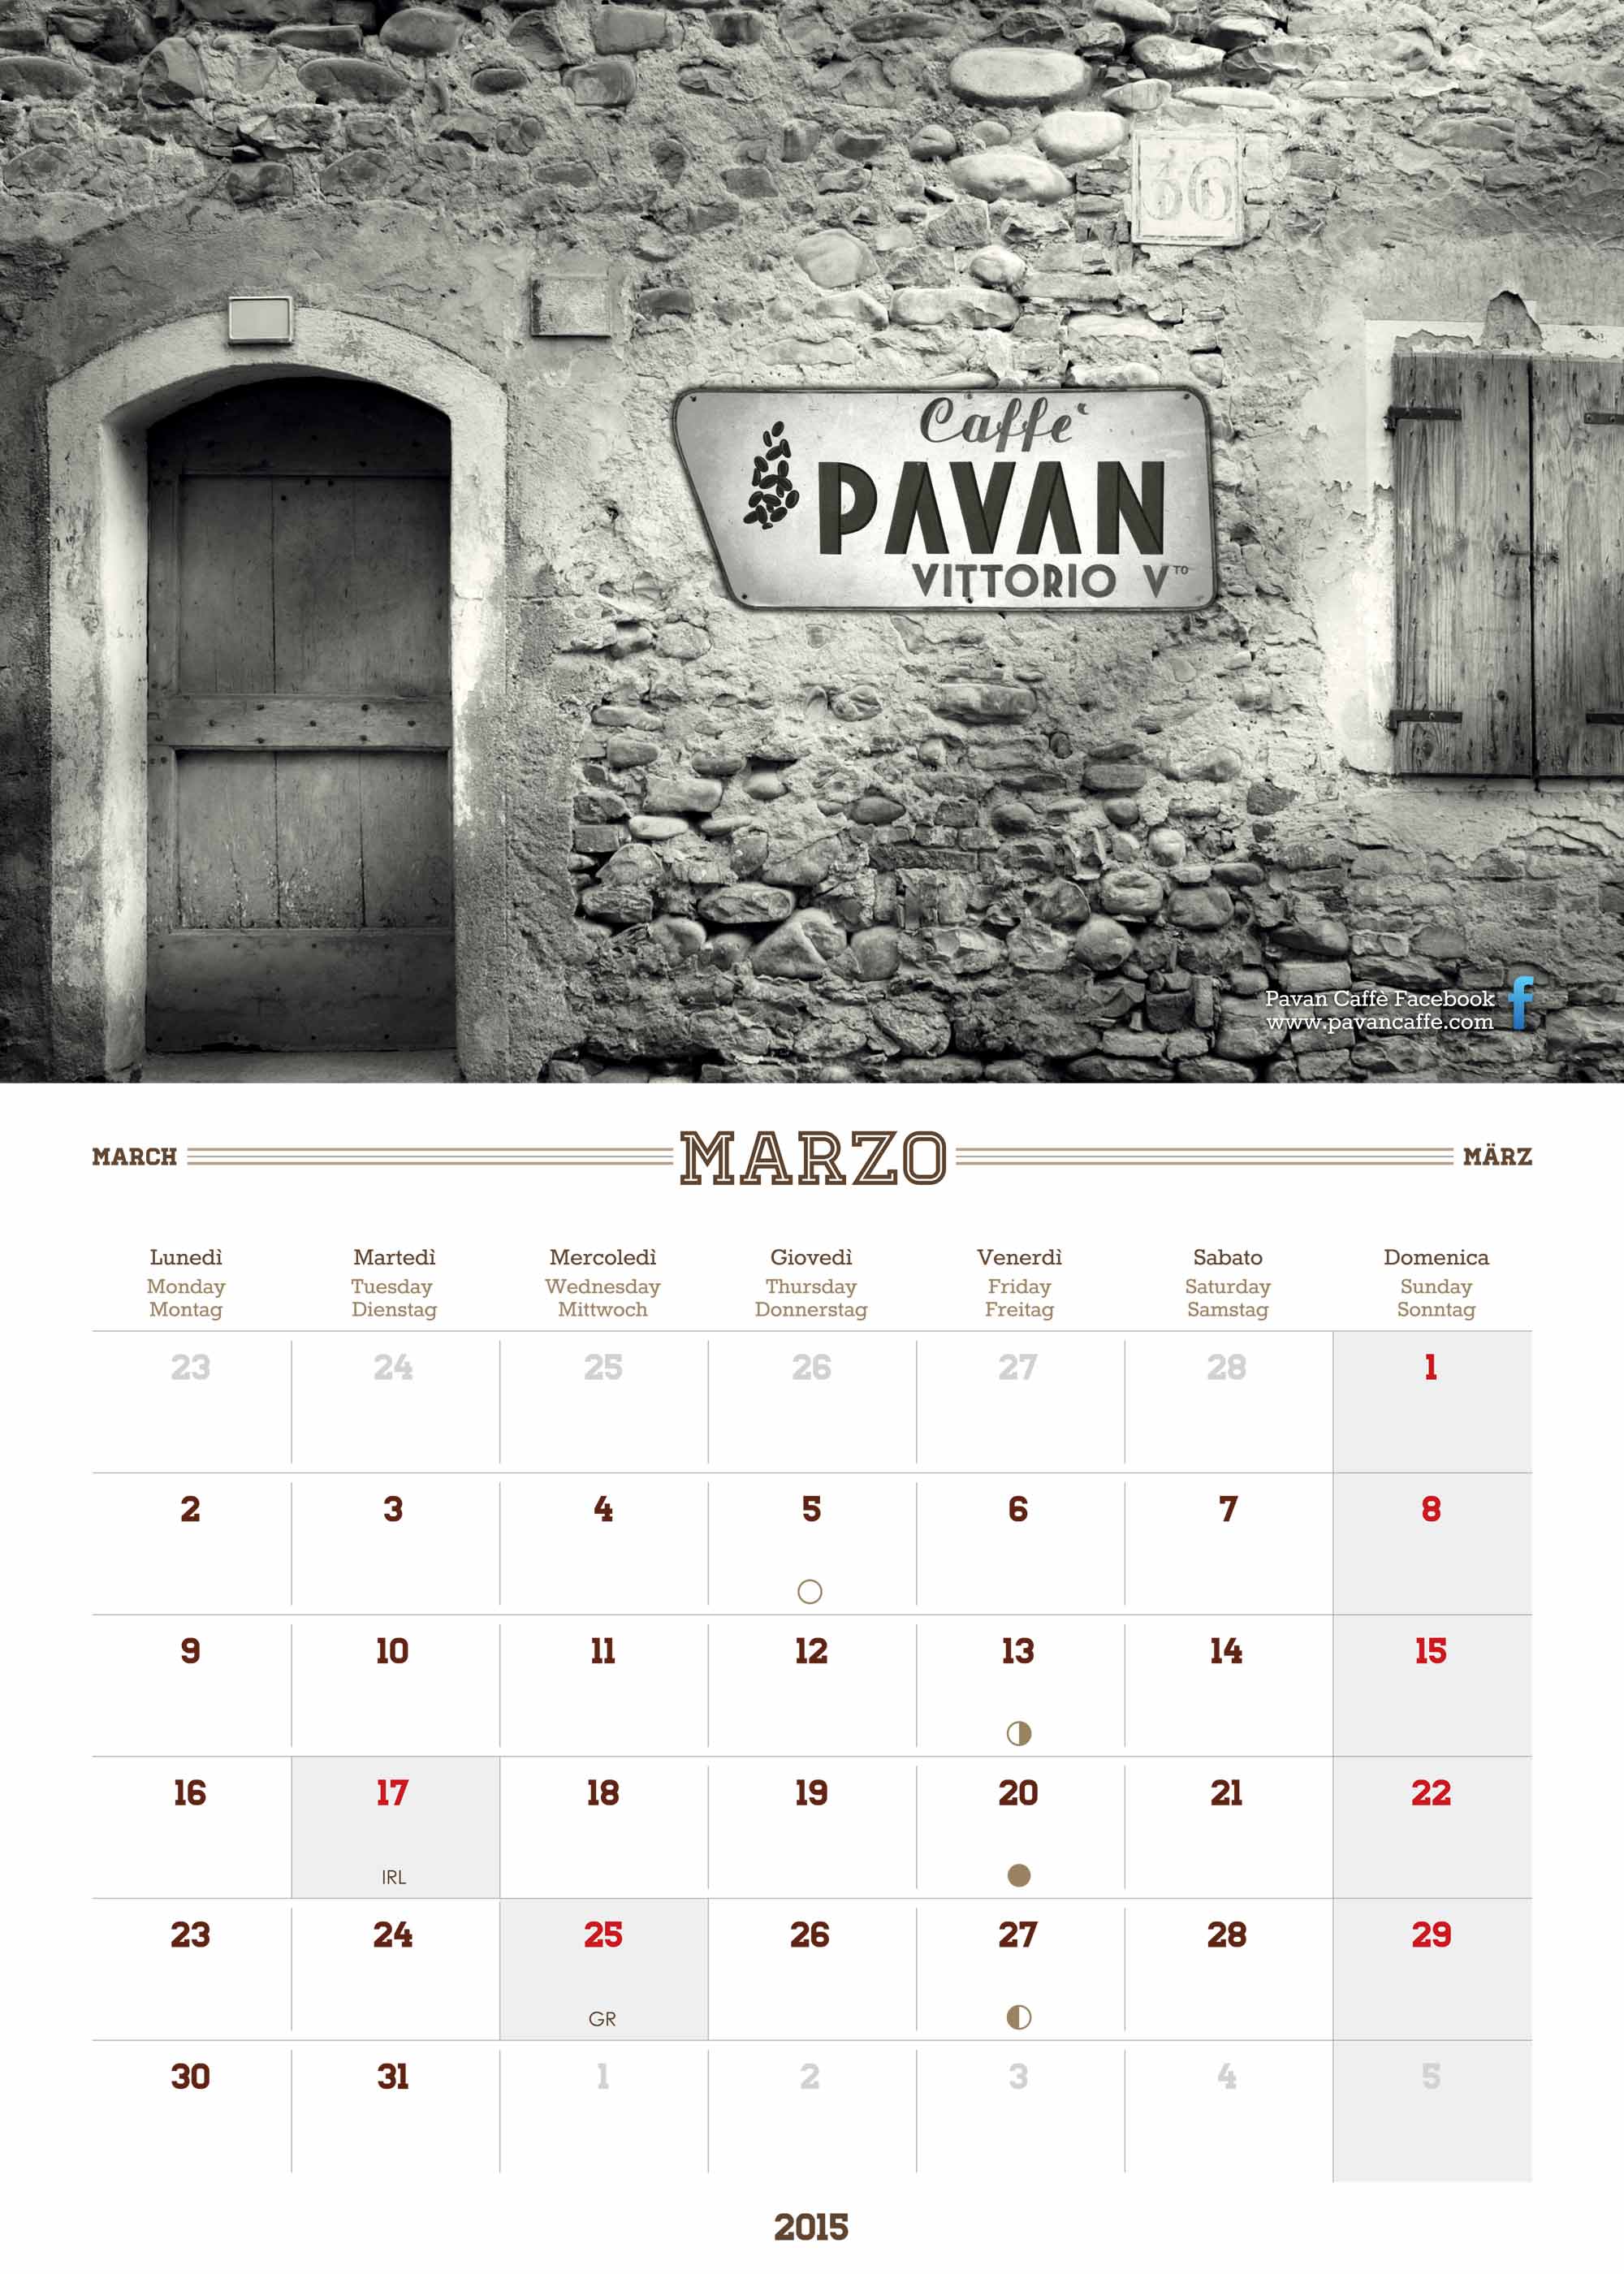 Pavan Caffè 2015 calendar March